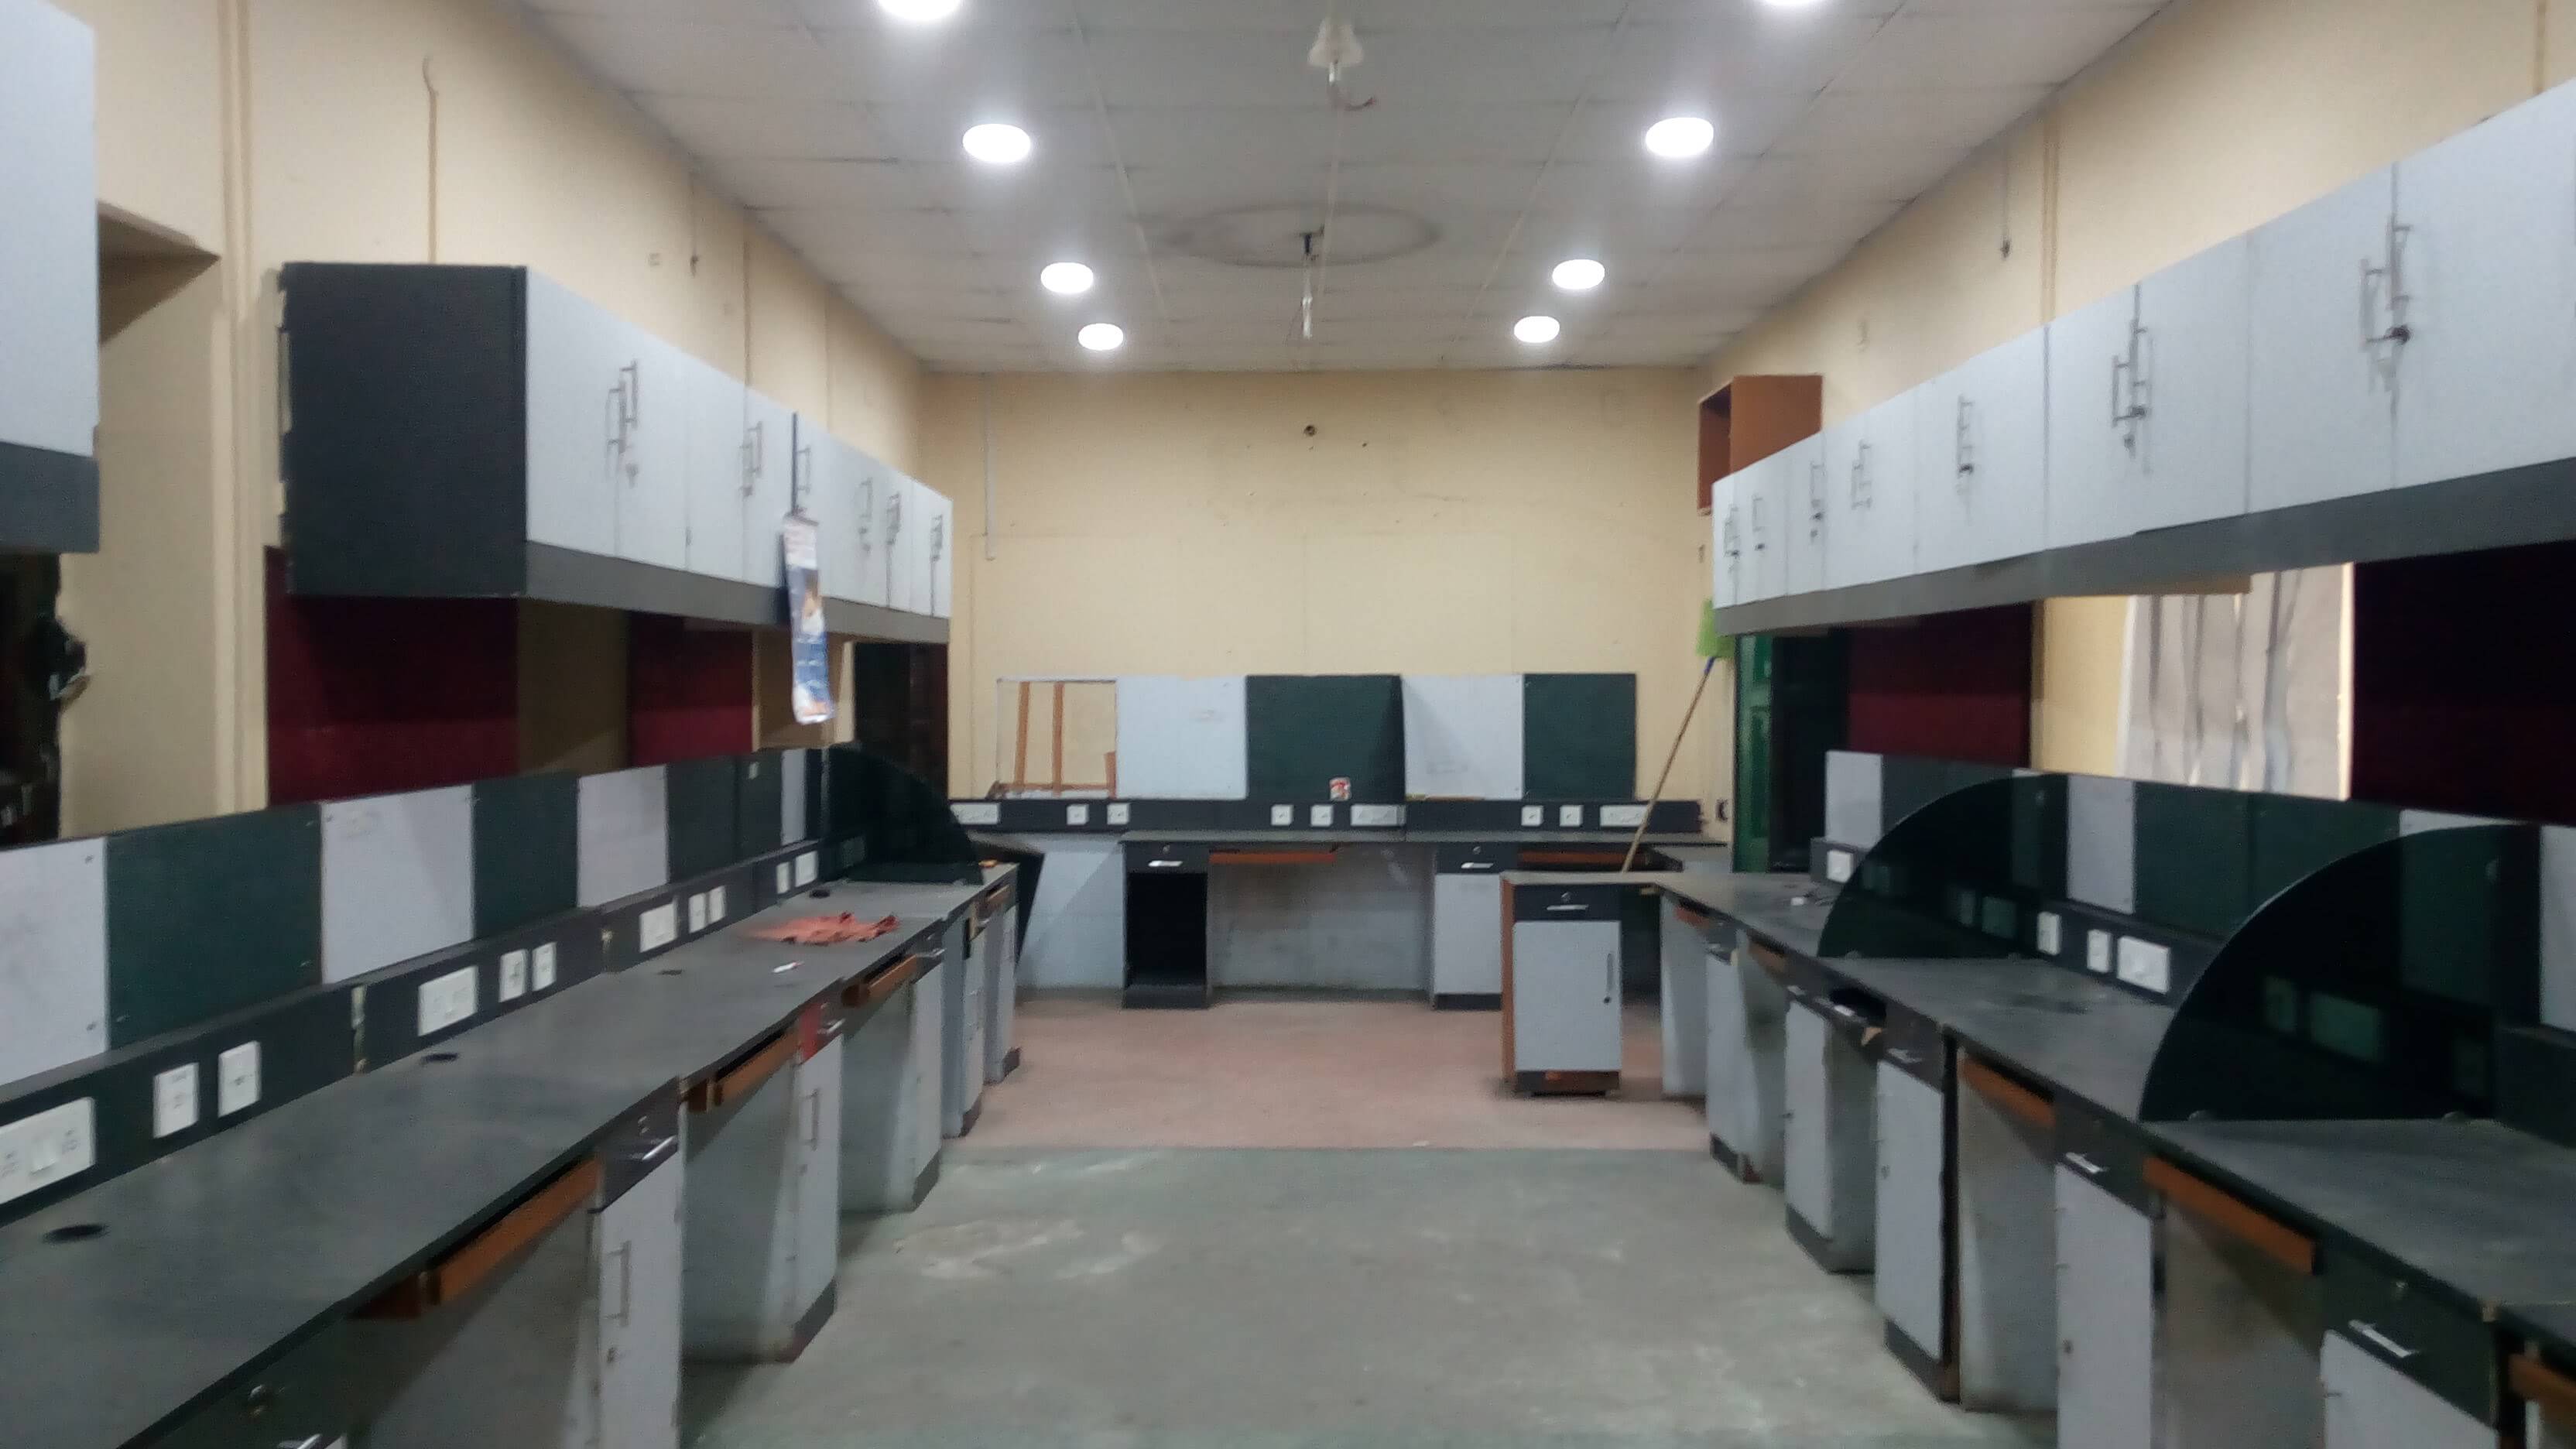 Office For Rent in Hazra,Kolkata (Id:22118)